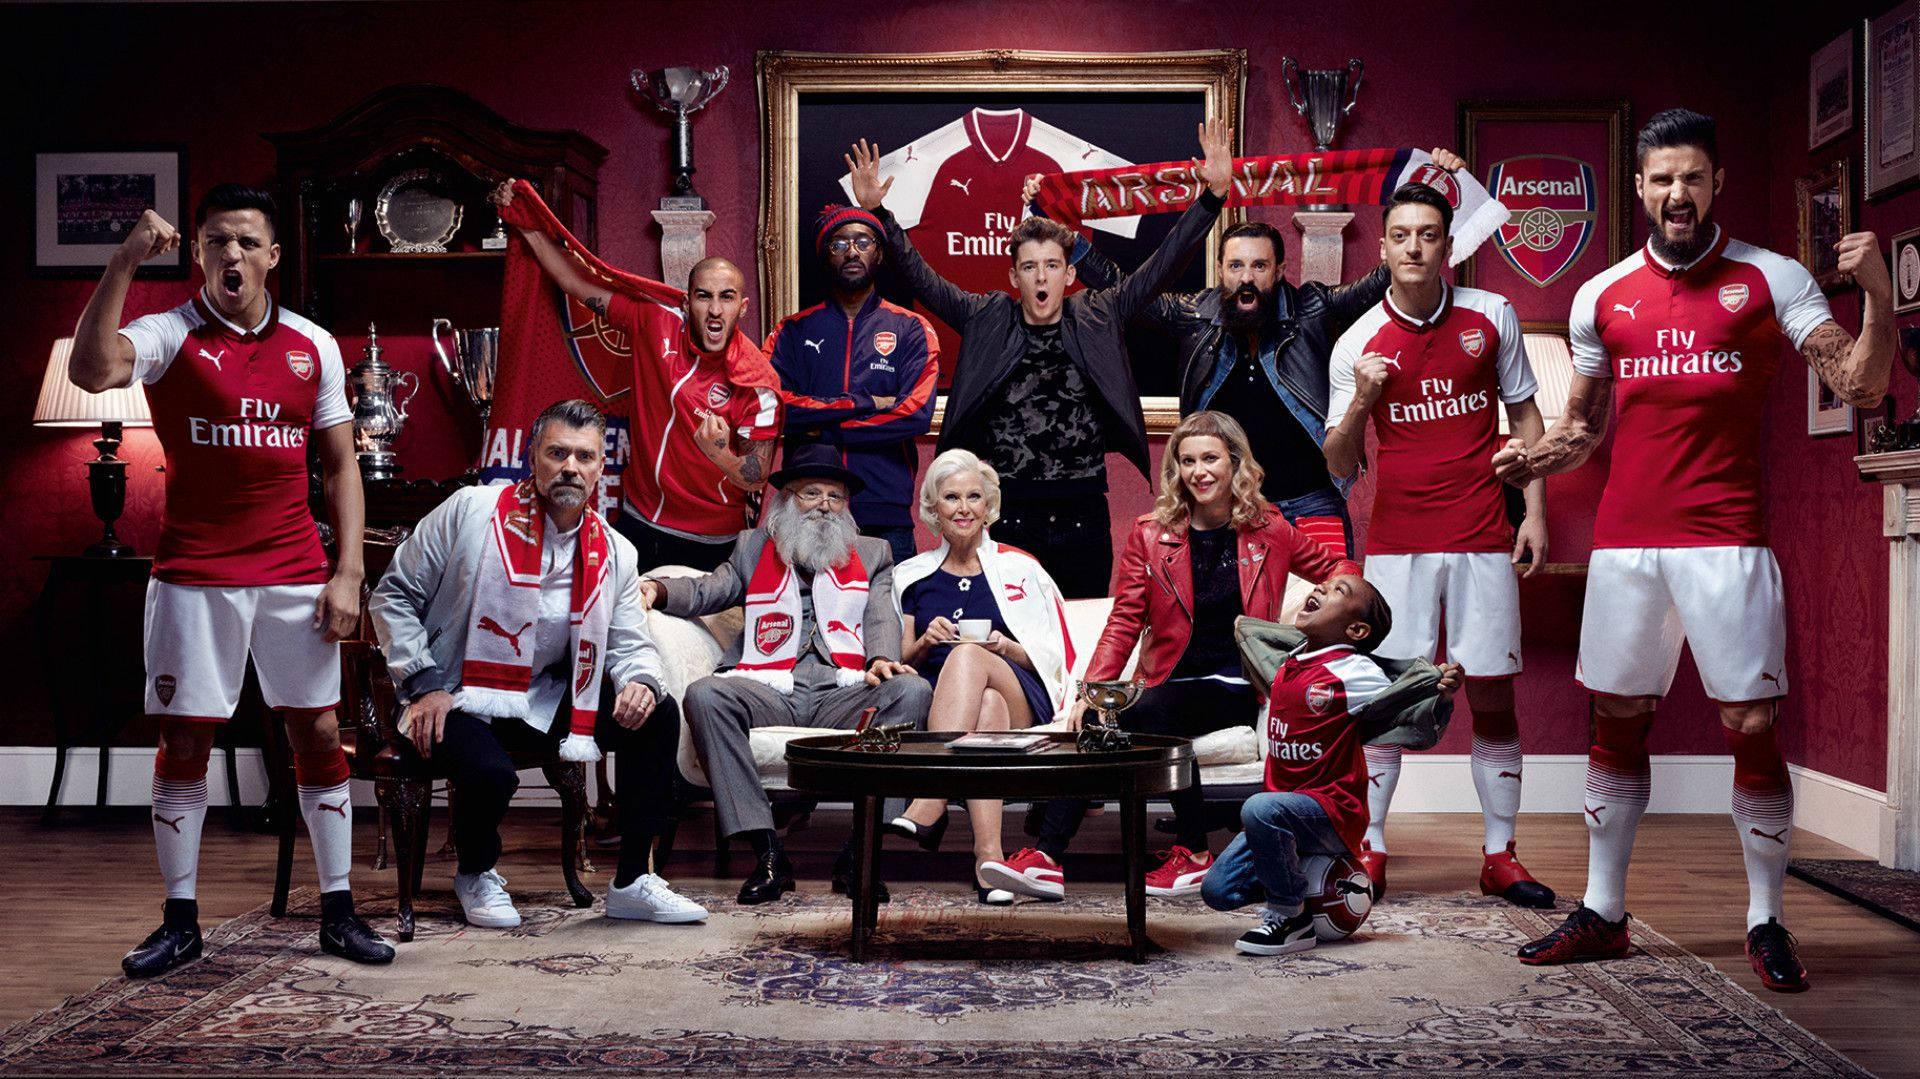 Arsenal Fc Promotional Photo Wallpaper